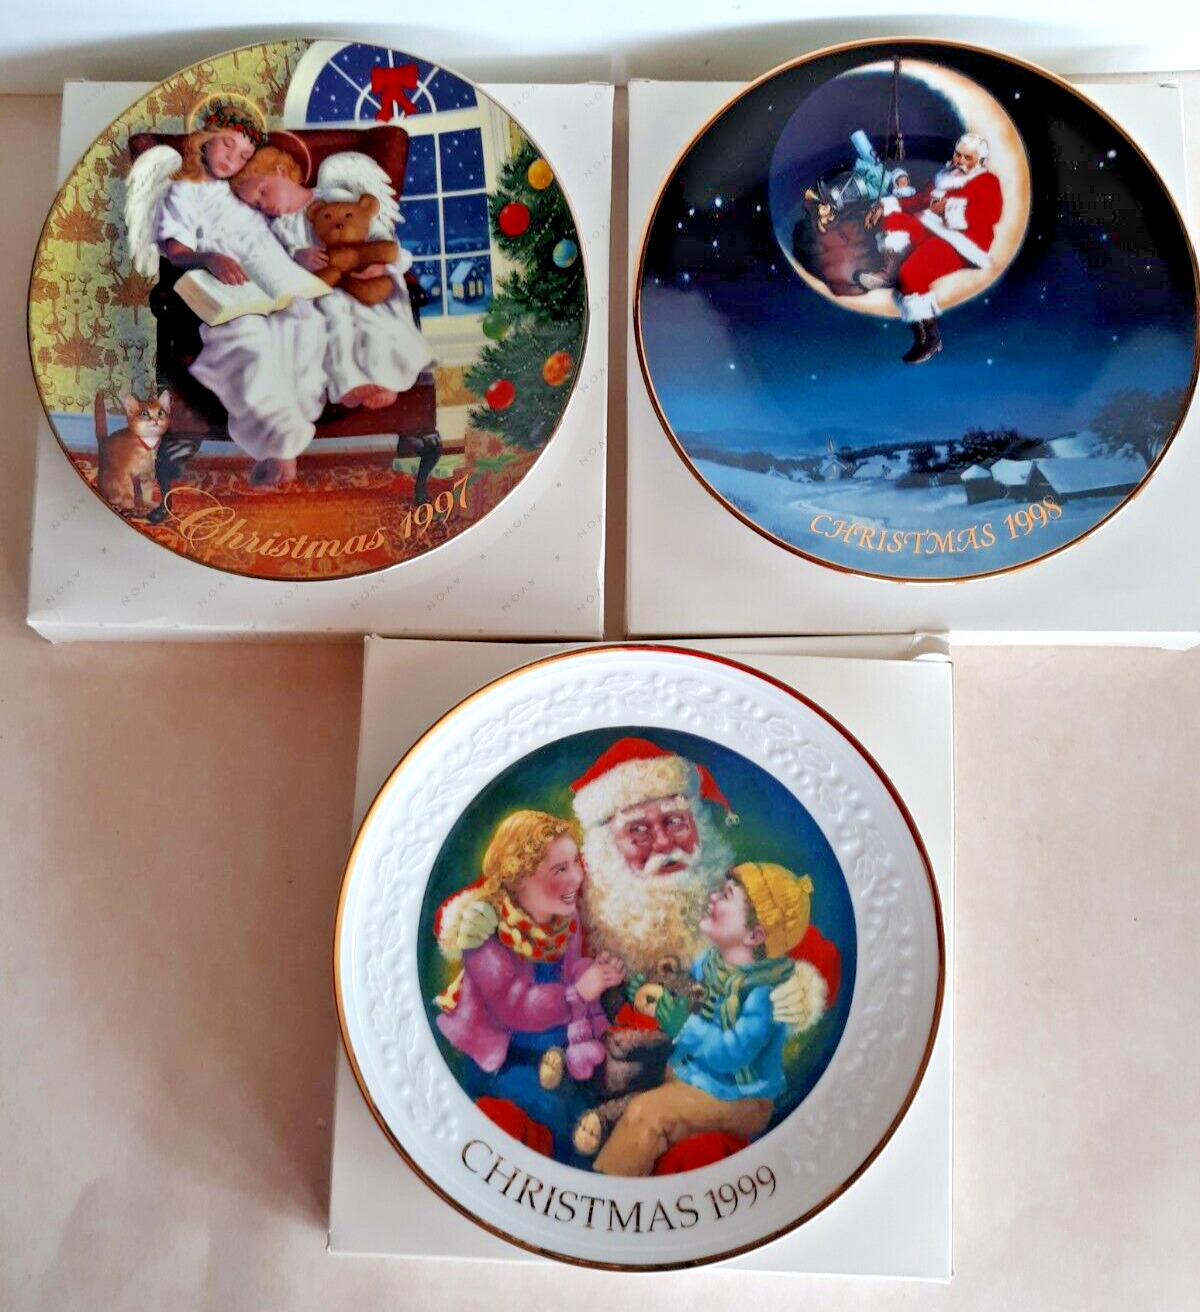 3 vintage Avon Christmas Plates 1997 1998 1999 in boxes